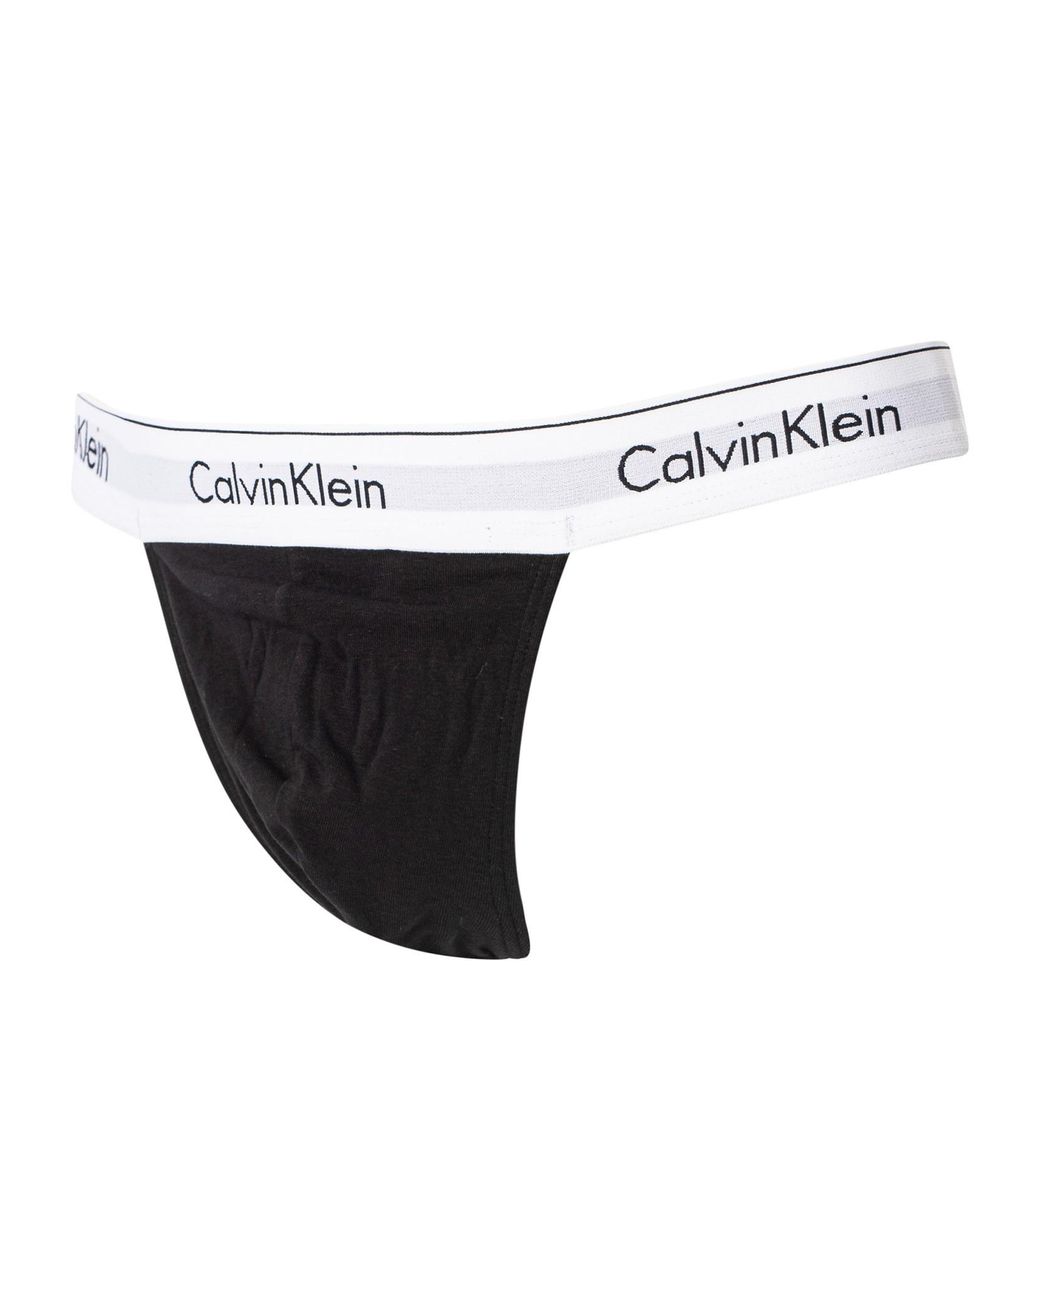 Calvin Klein Women's 3-Cotton Stretch Thongs Large Gray/Black